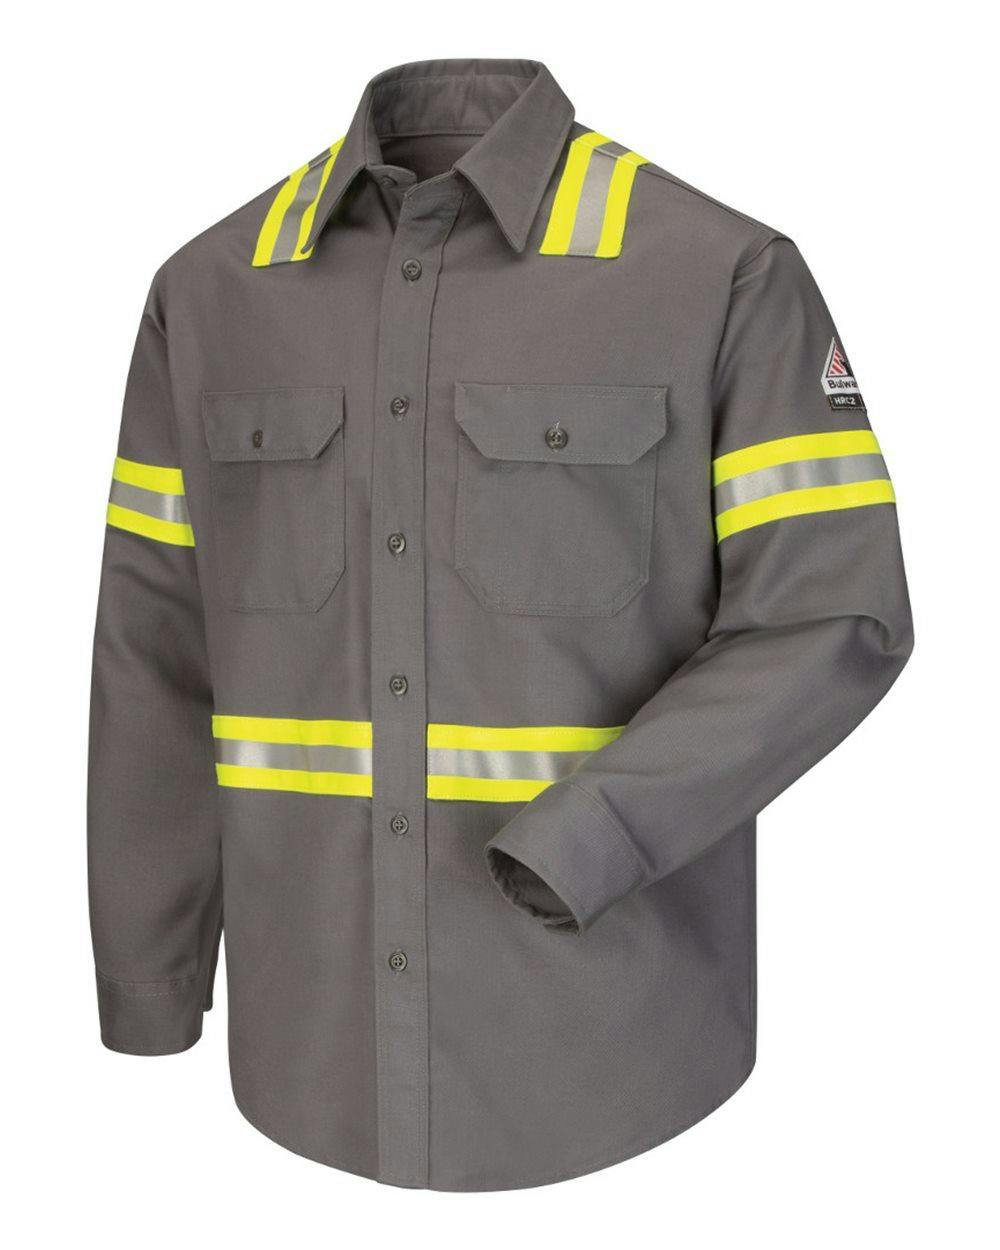 Image for Enhanced Visibility Uniform Shirt - SLDT